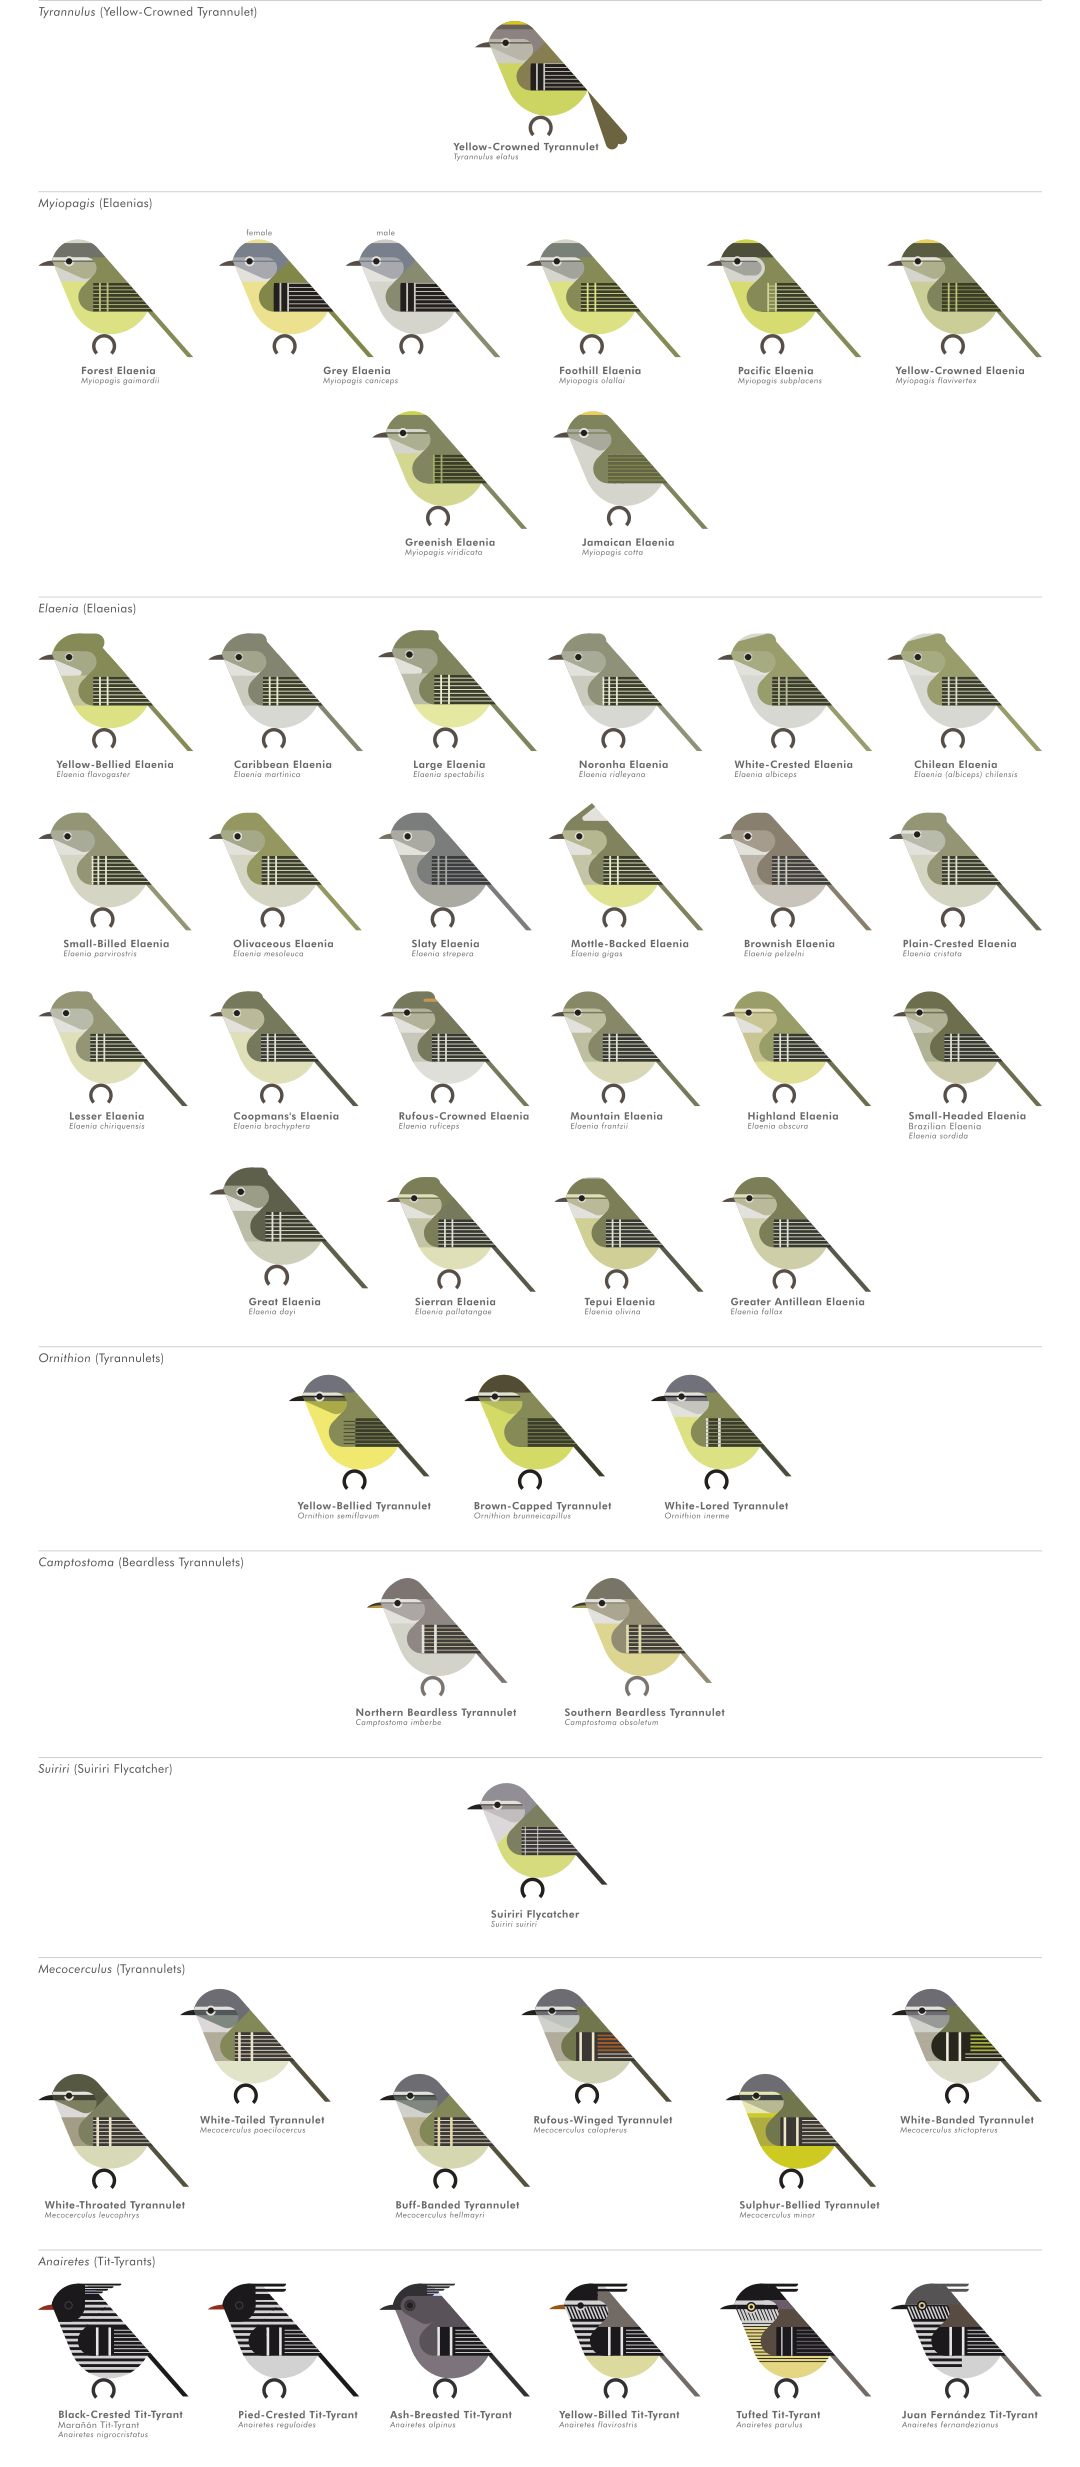 scott partridge - AVE - avian vector encyclopedia - tyrannulets - bird vector art